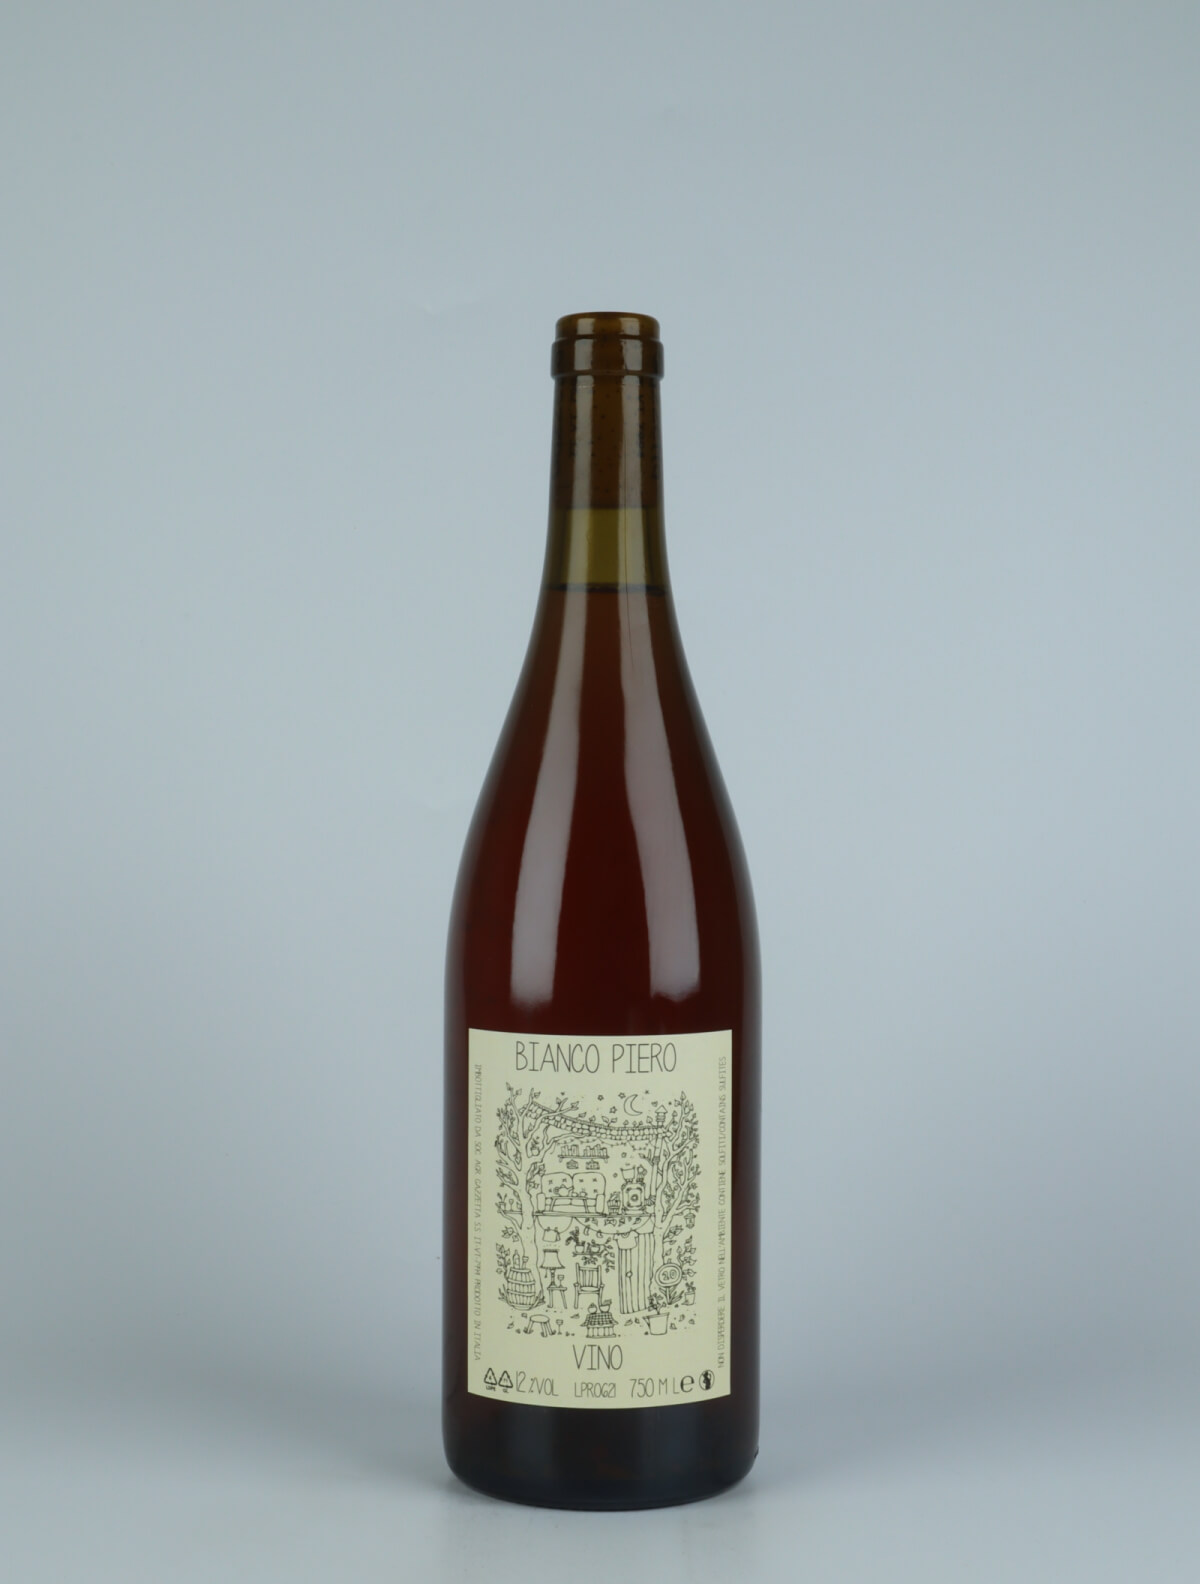 A bottle 2021 Vino Bianco Piero Orange wine from Gazzetta, Lazio in Italy